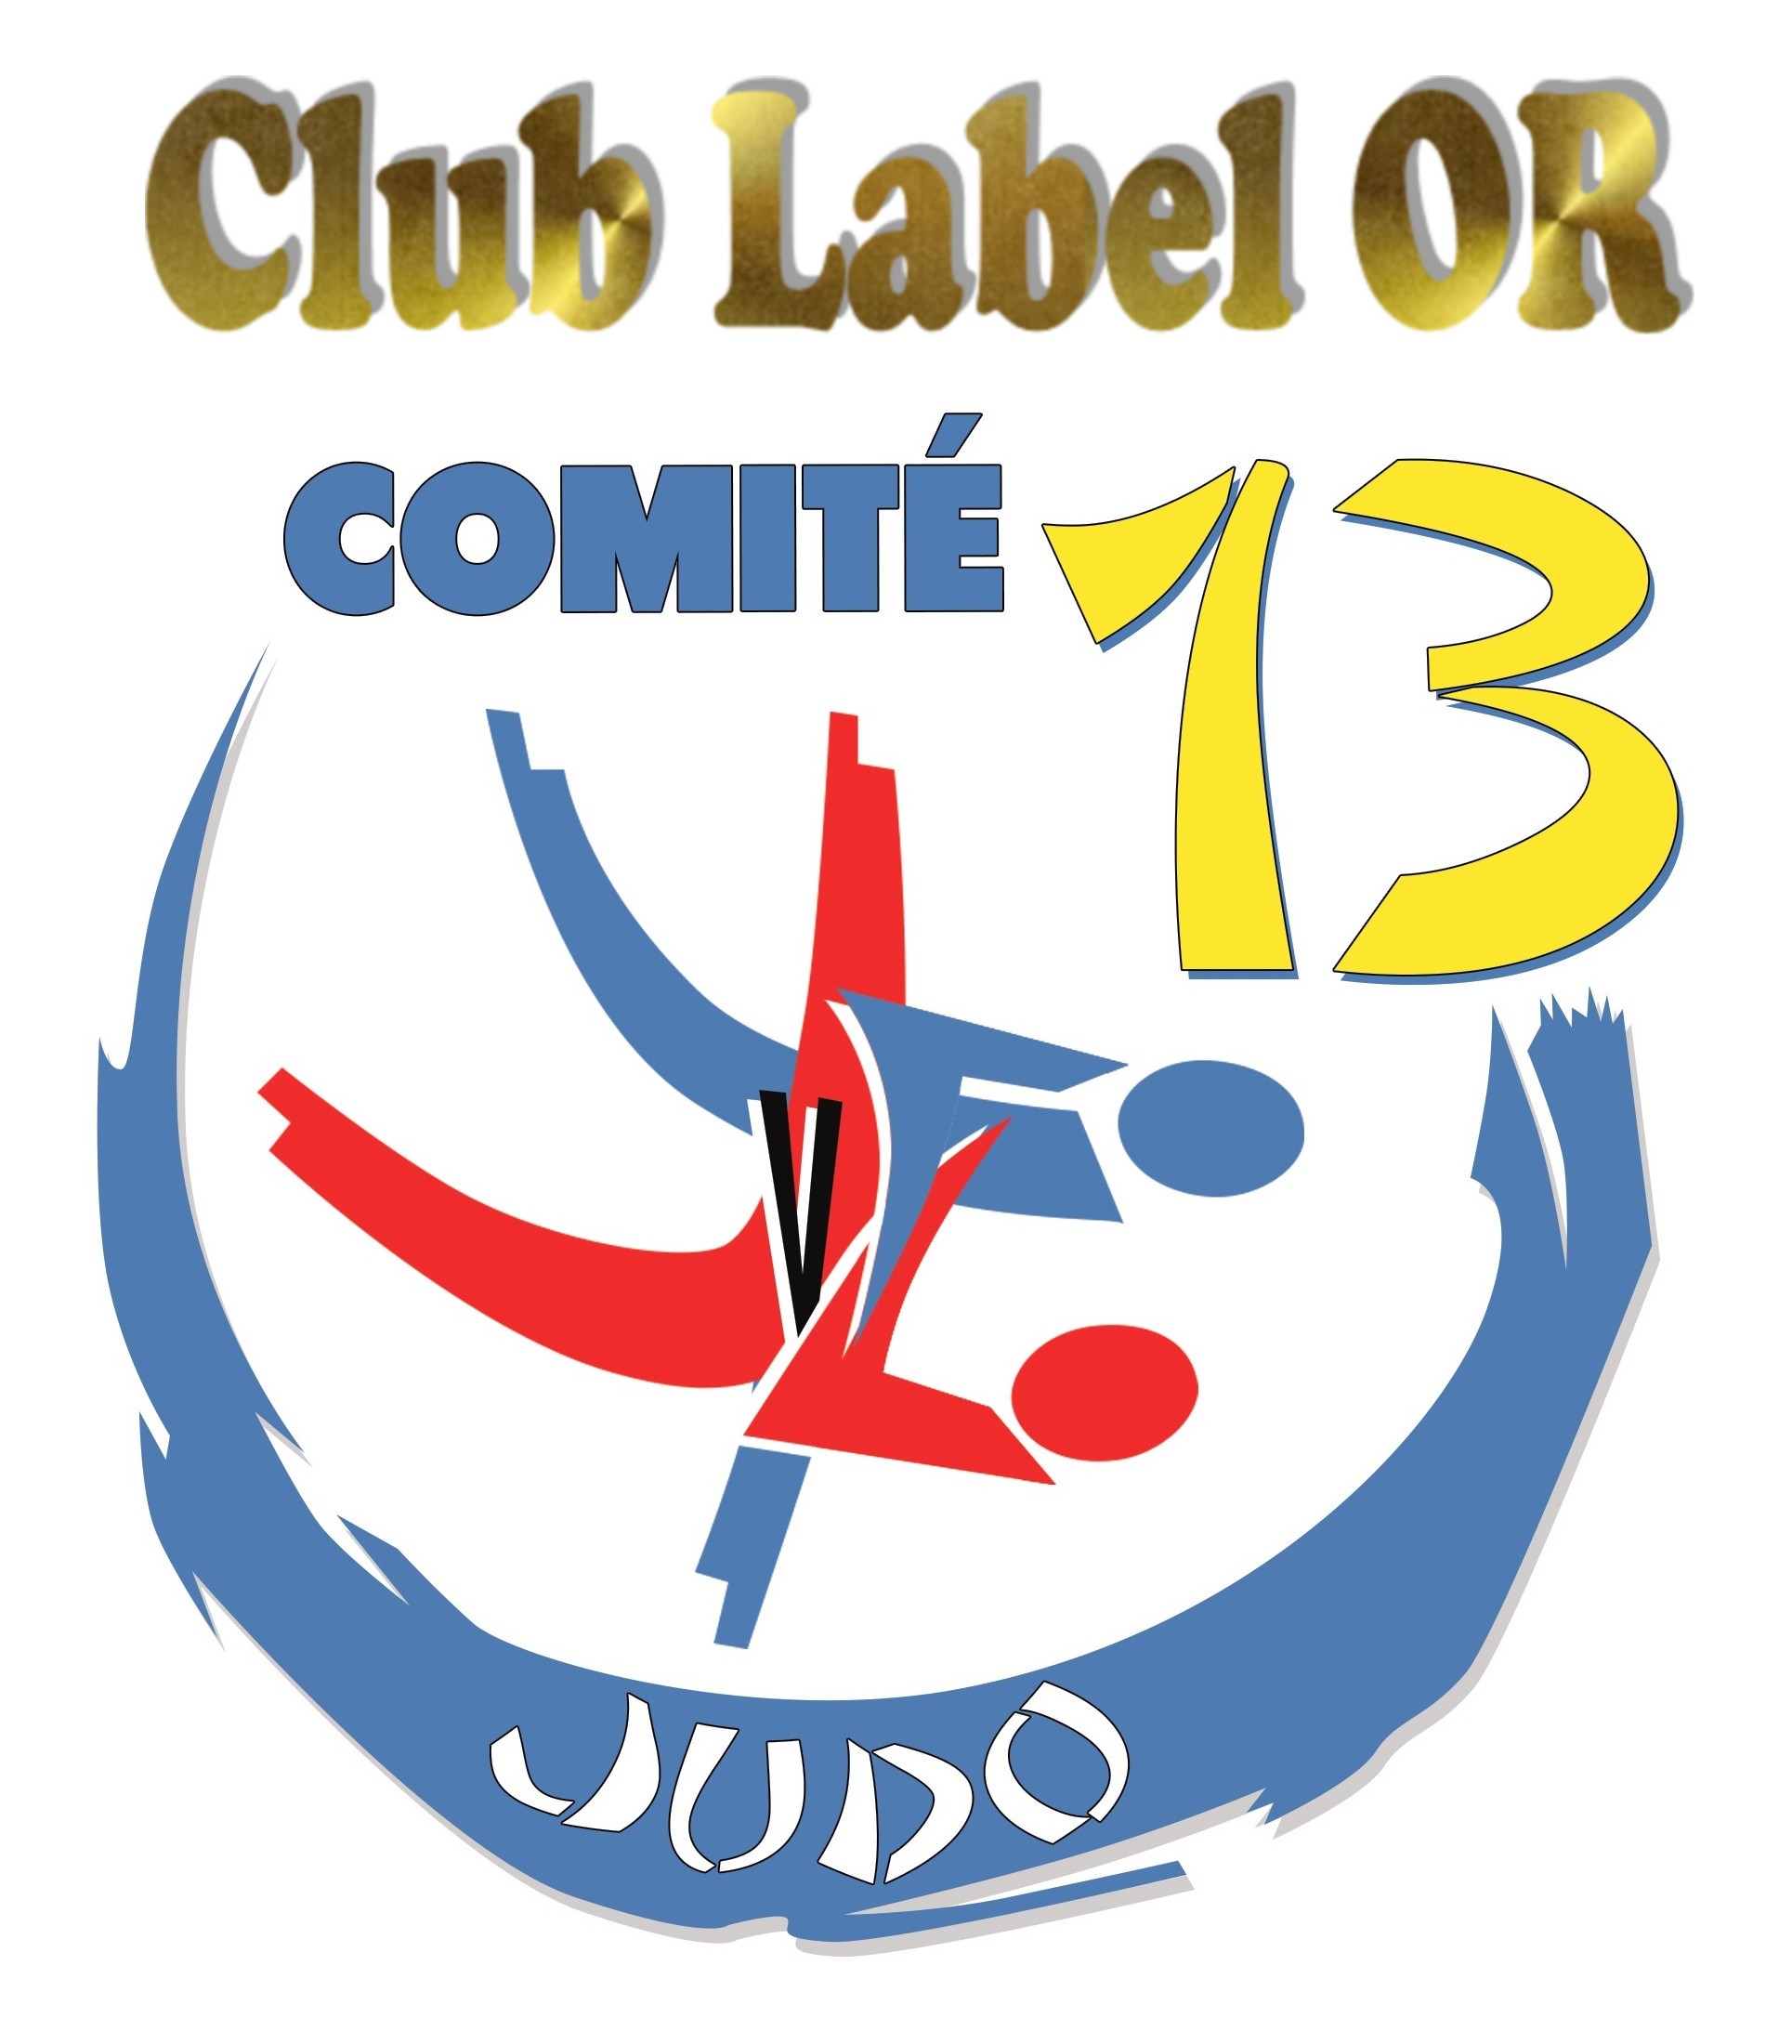 Logo CD13 label Or.jpg